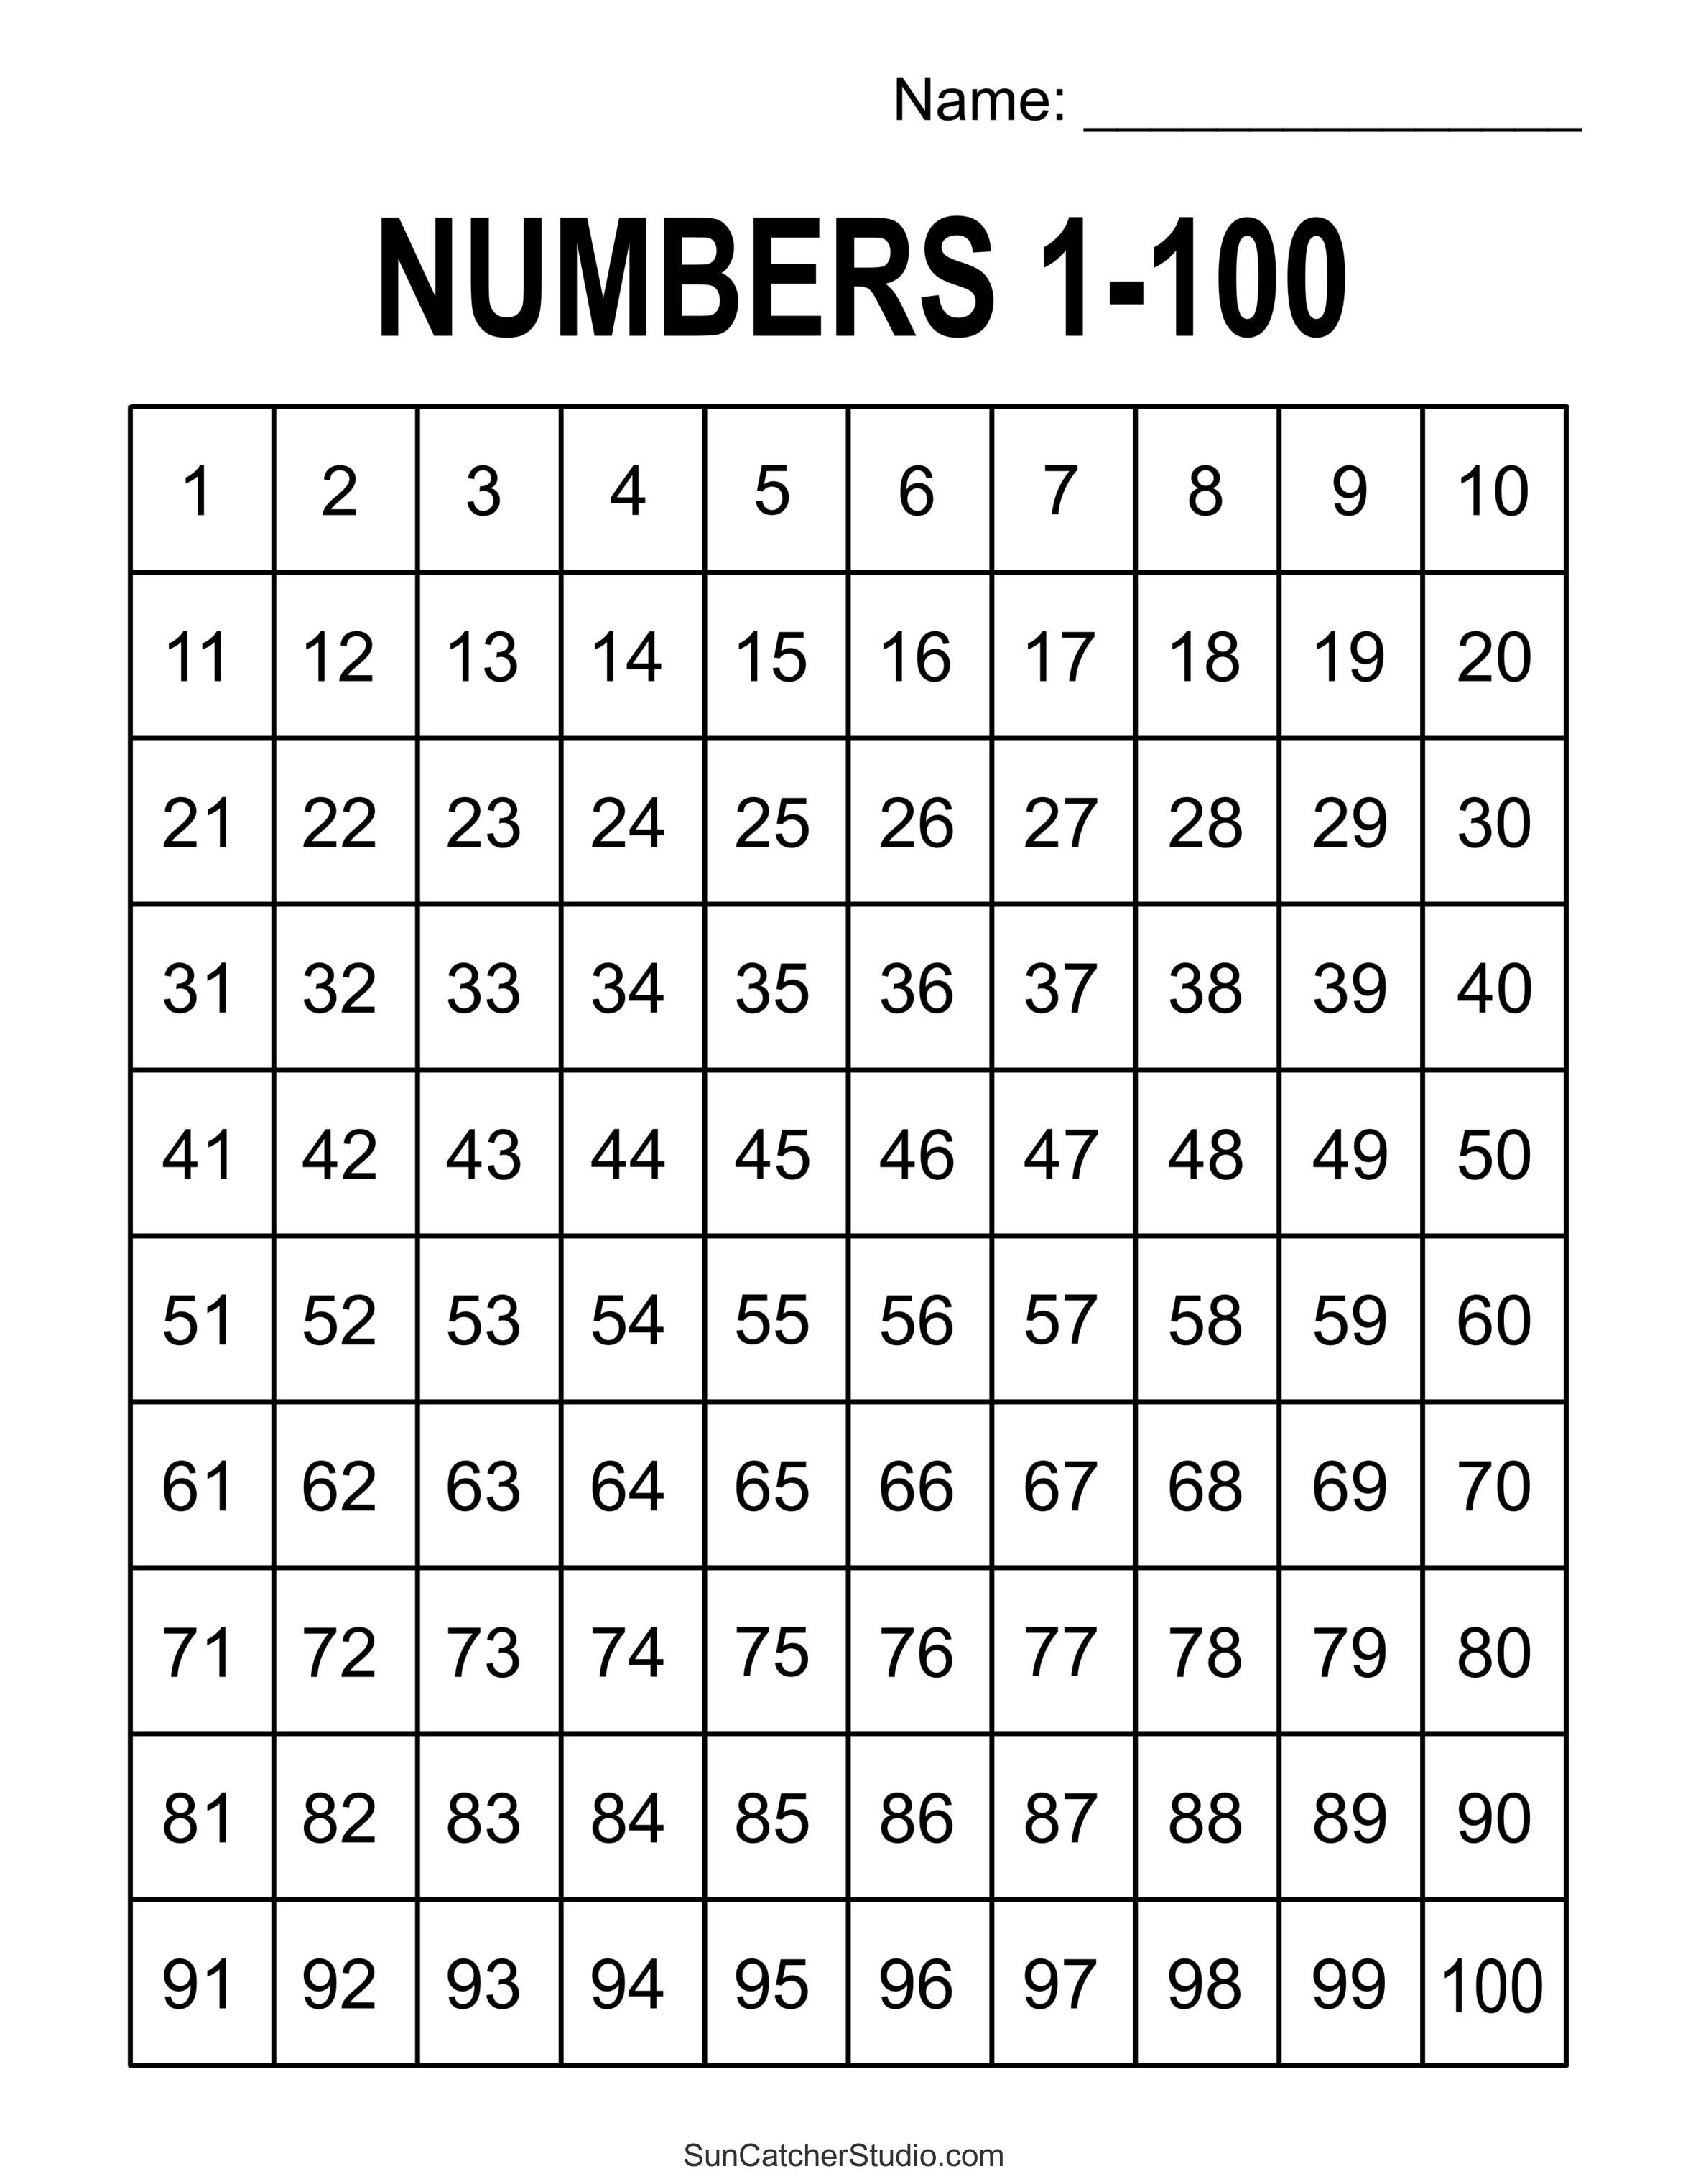 Printable List Of Numbers 1 100 Infoupdate org